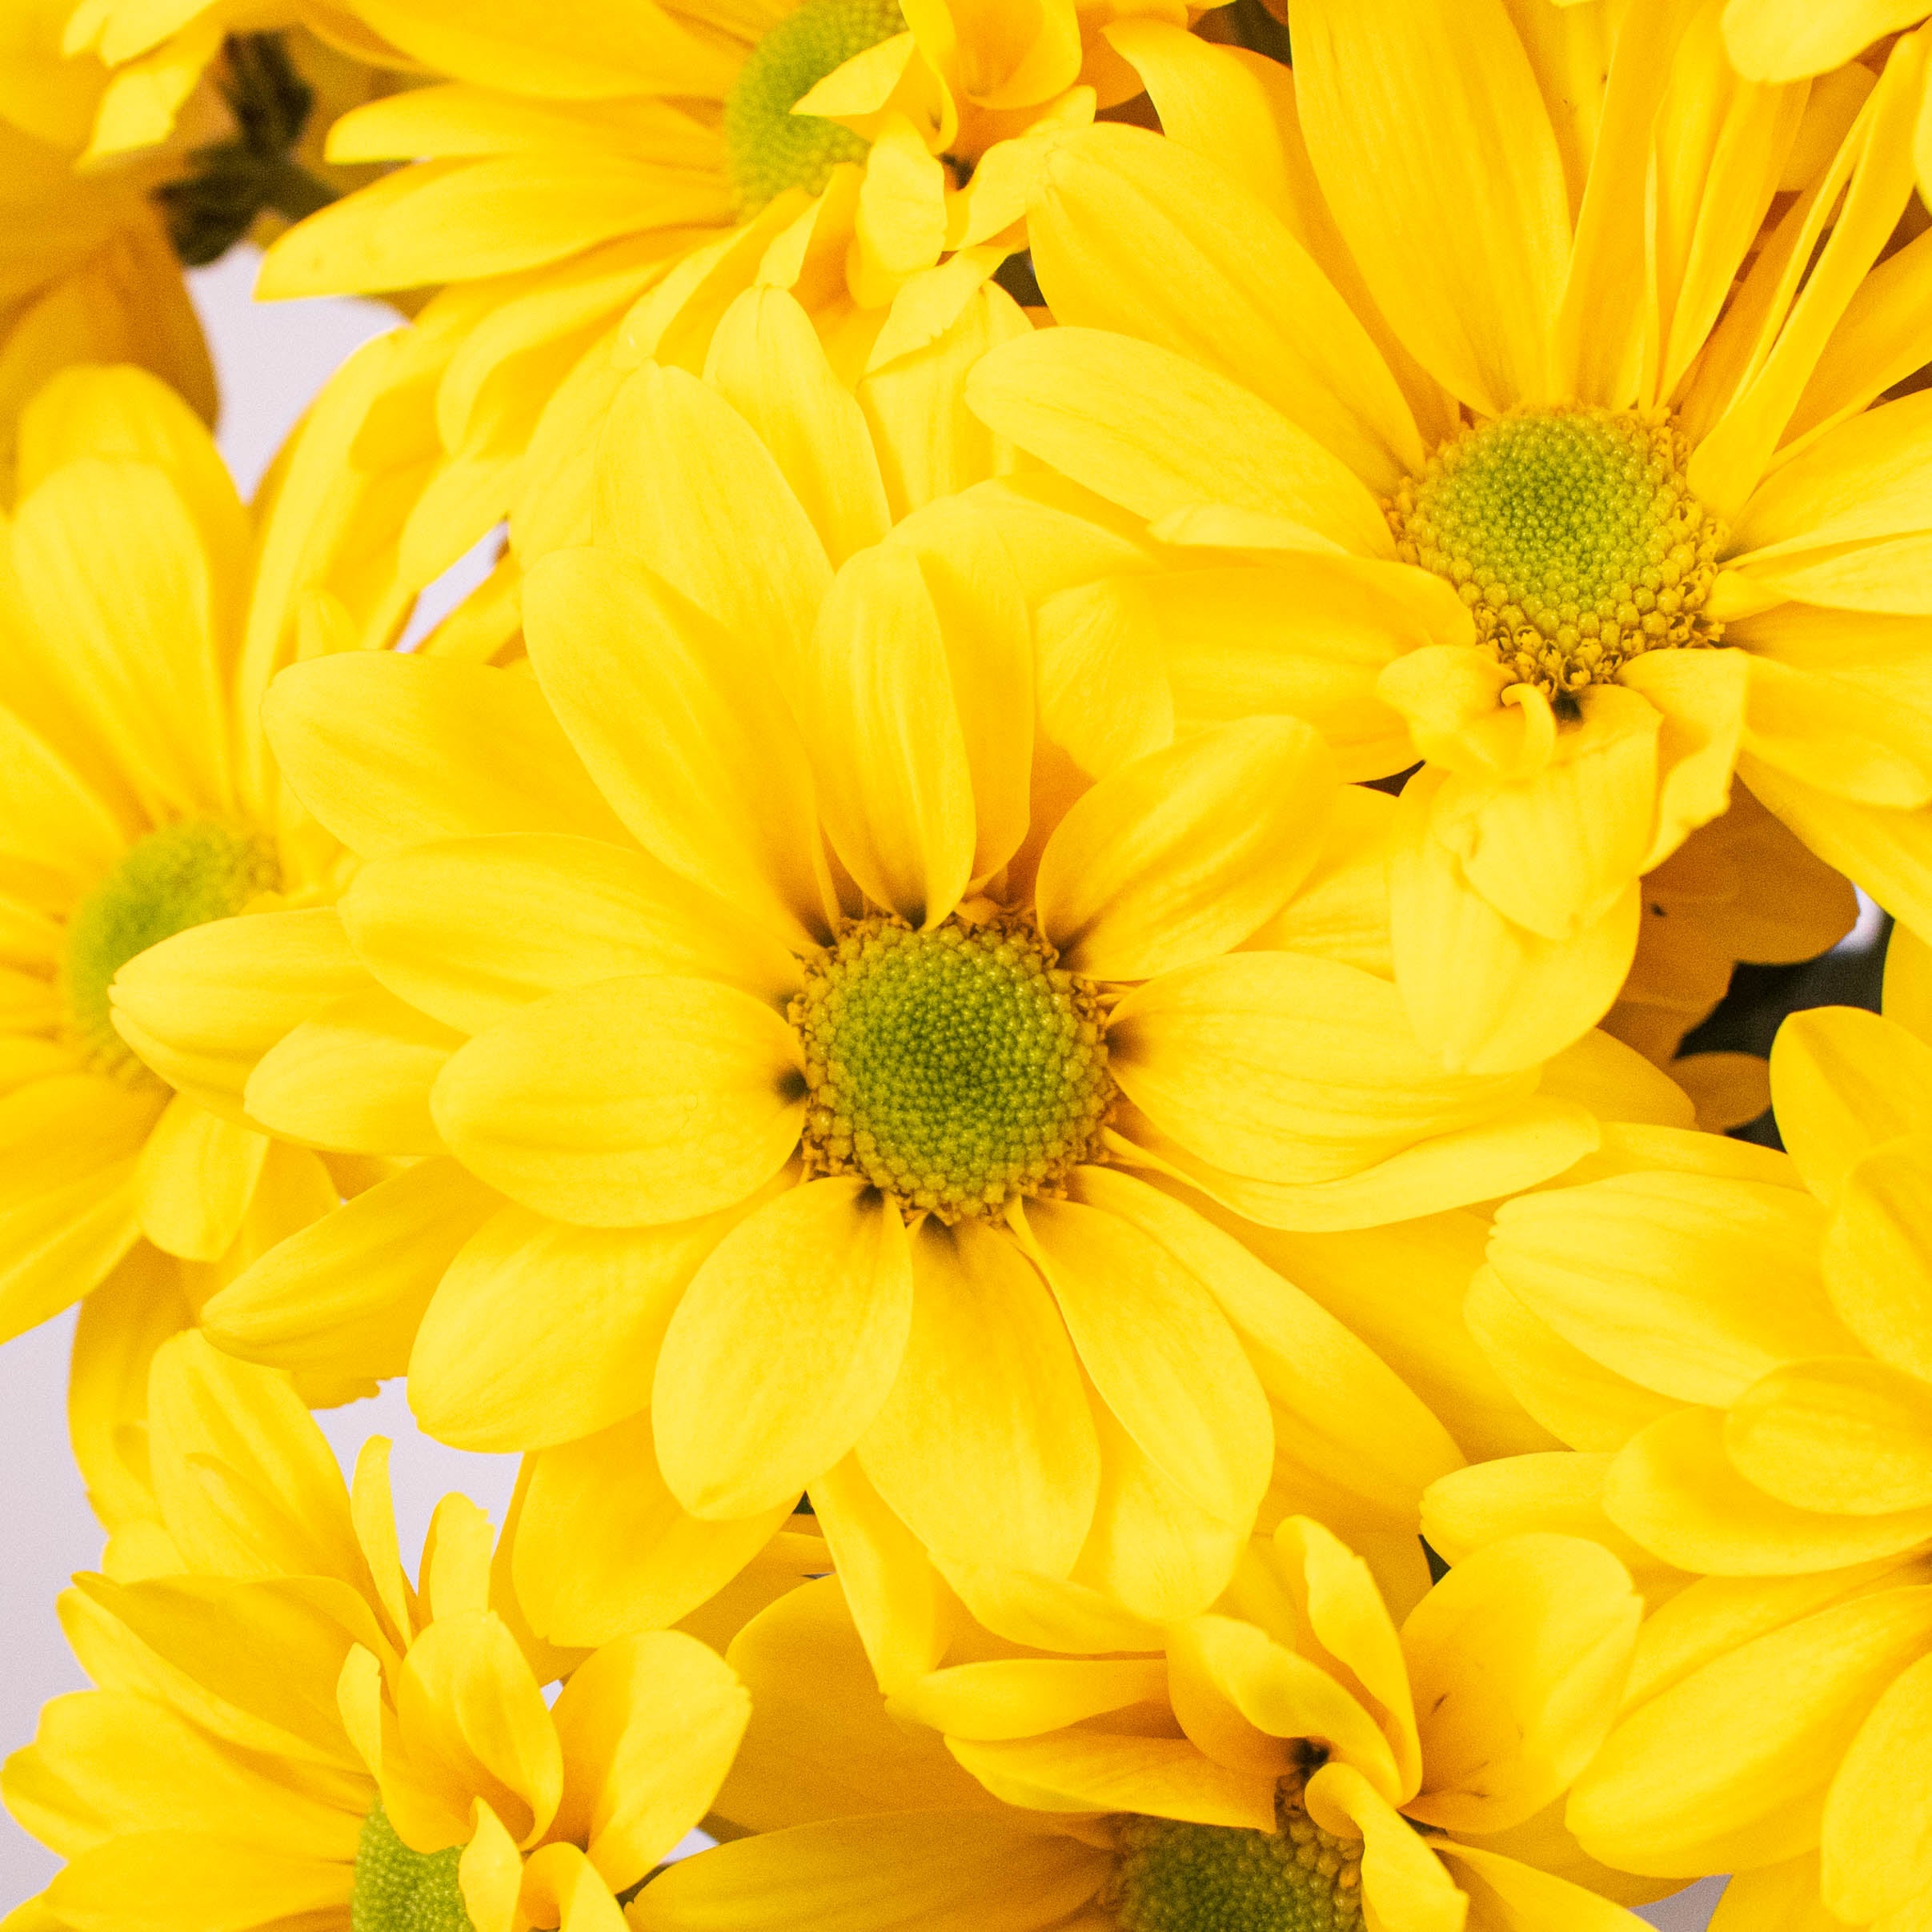 yellow daisy flower up close